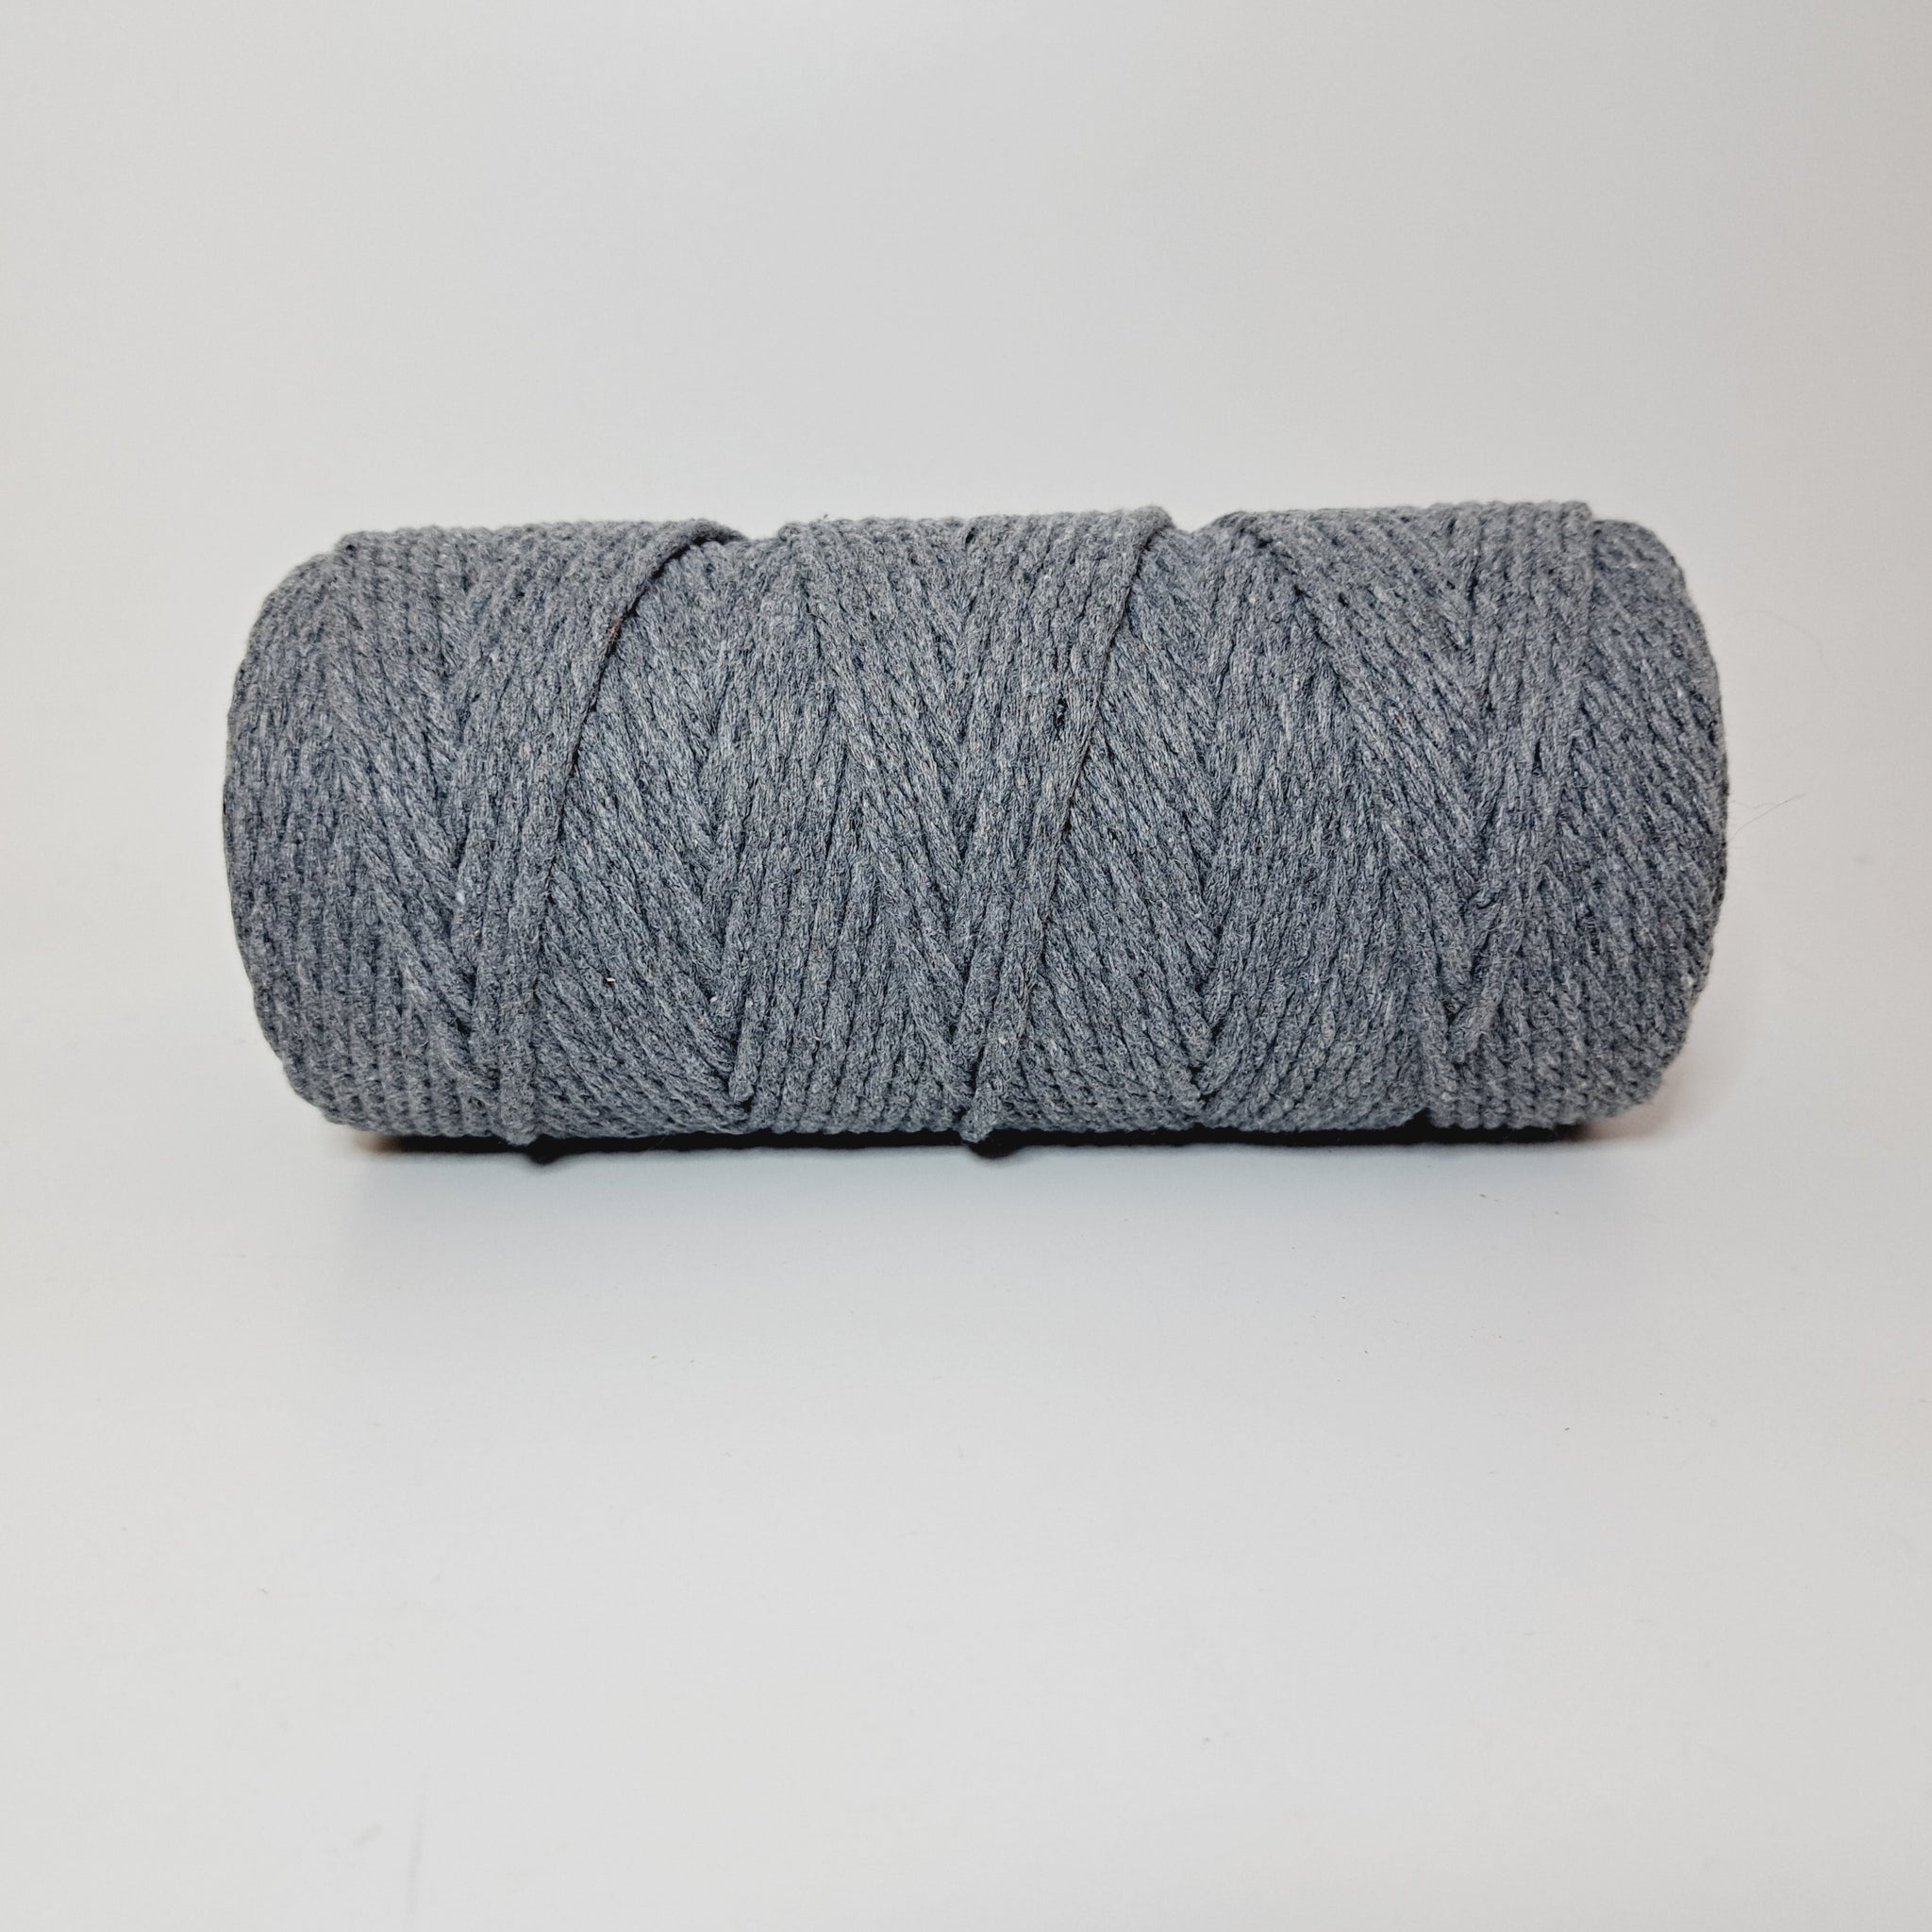 Artisan Macrame Rope 100% Natural Cotton Twisted Cord Craft String DIY  3mm*100m